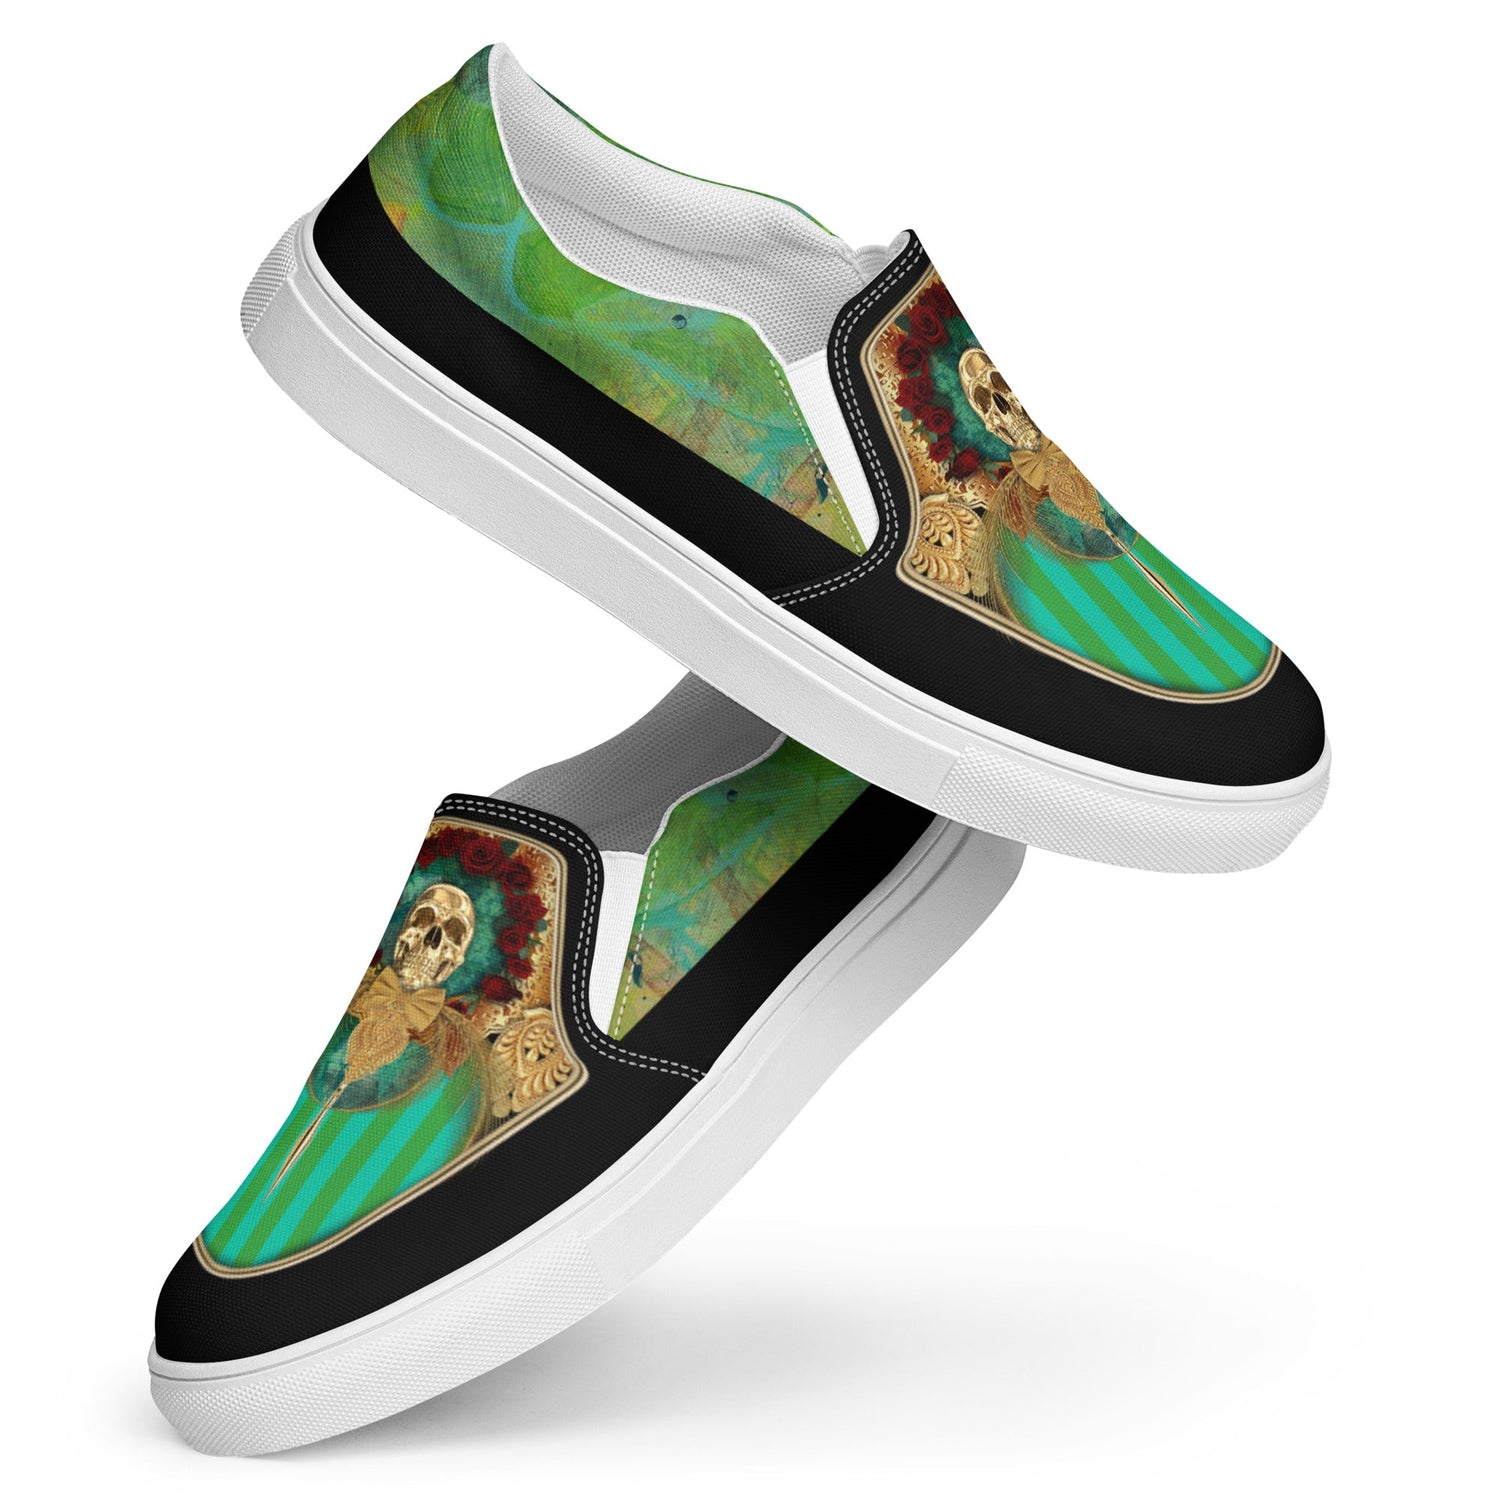 klasneakers Men’s slip-on canvas shoes - Green Skull